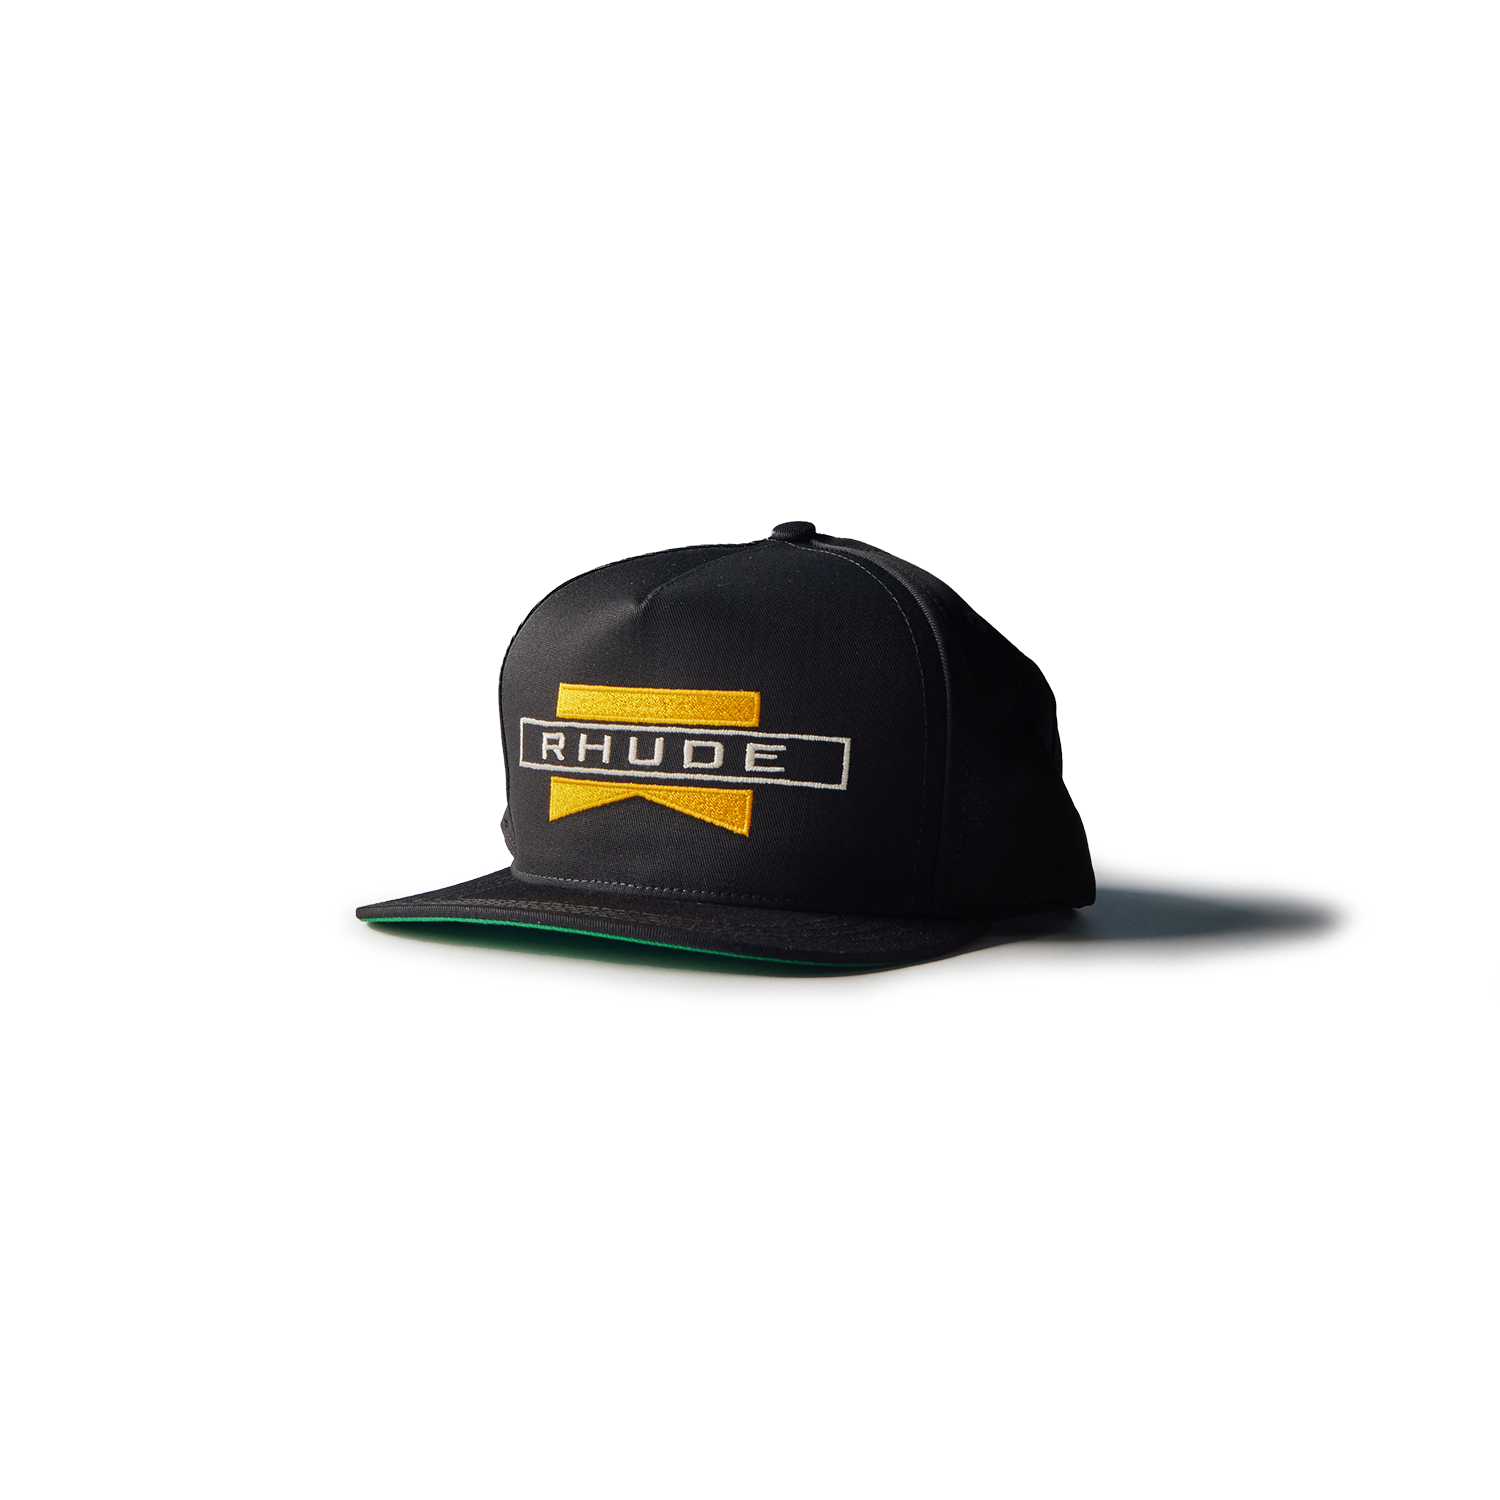 RHUDE - Chevron Hat product image